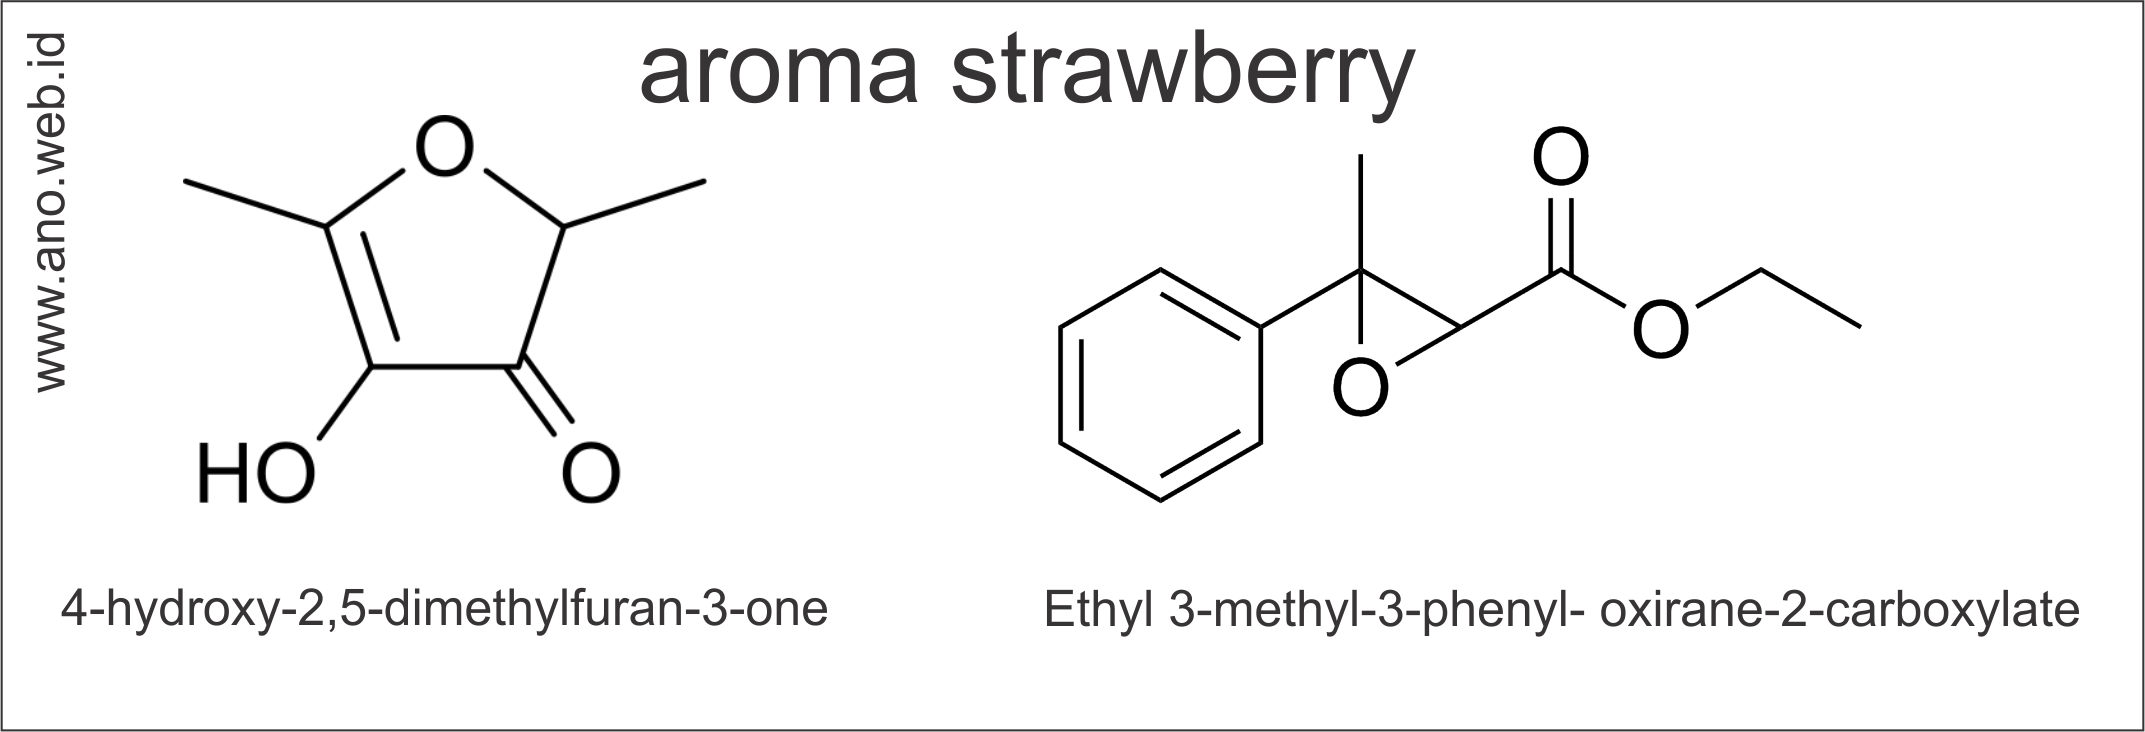 aroma strawberry